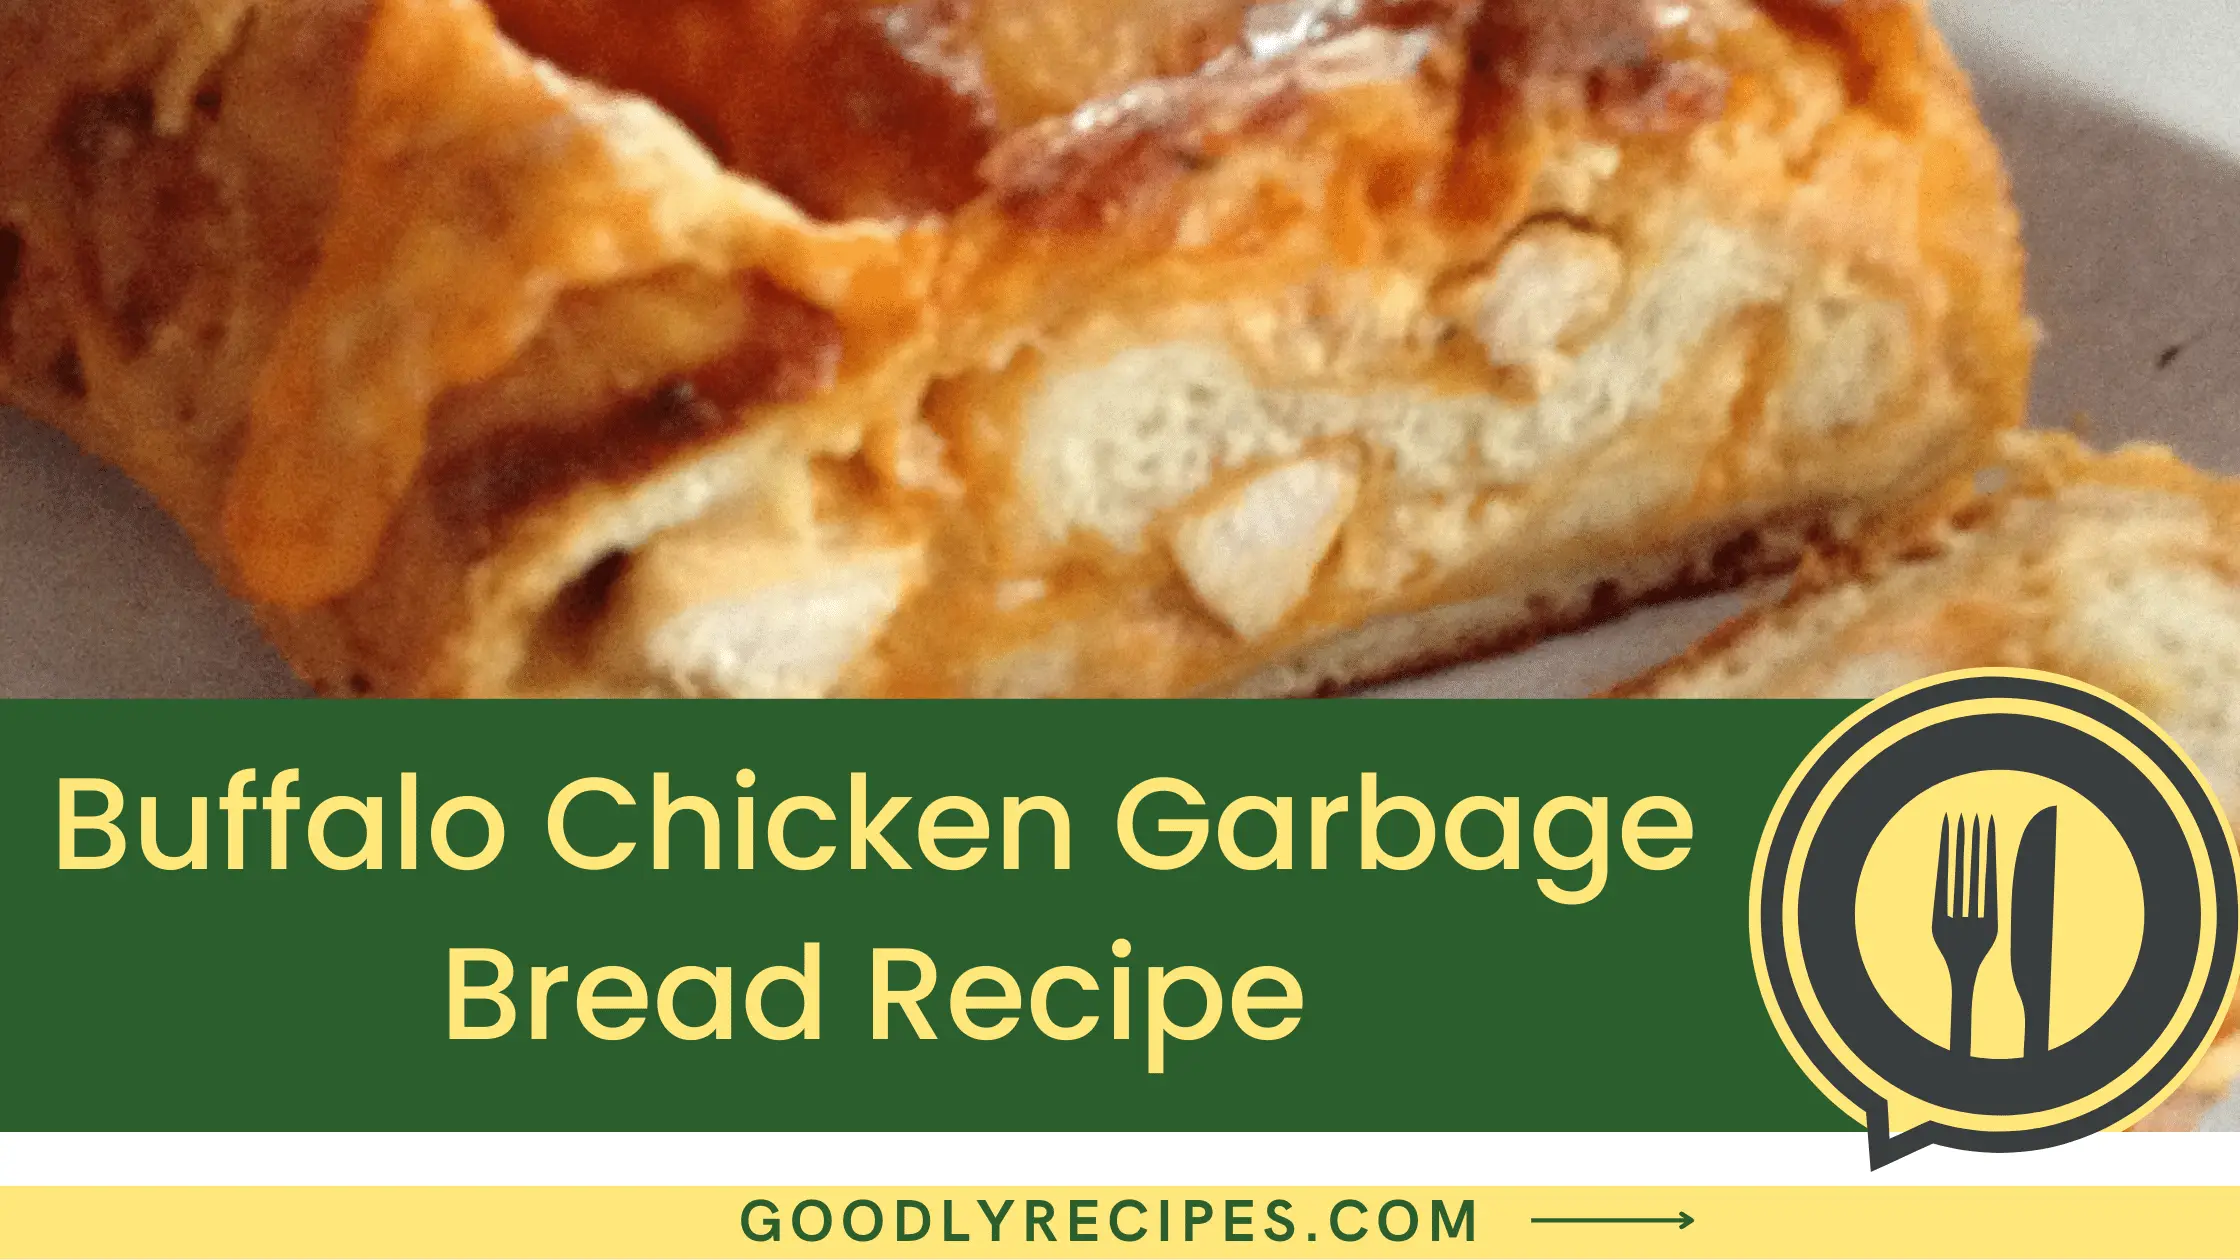 Buffalo Chicken Garbage Bread Recipe - For Food Lovers